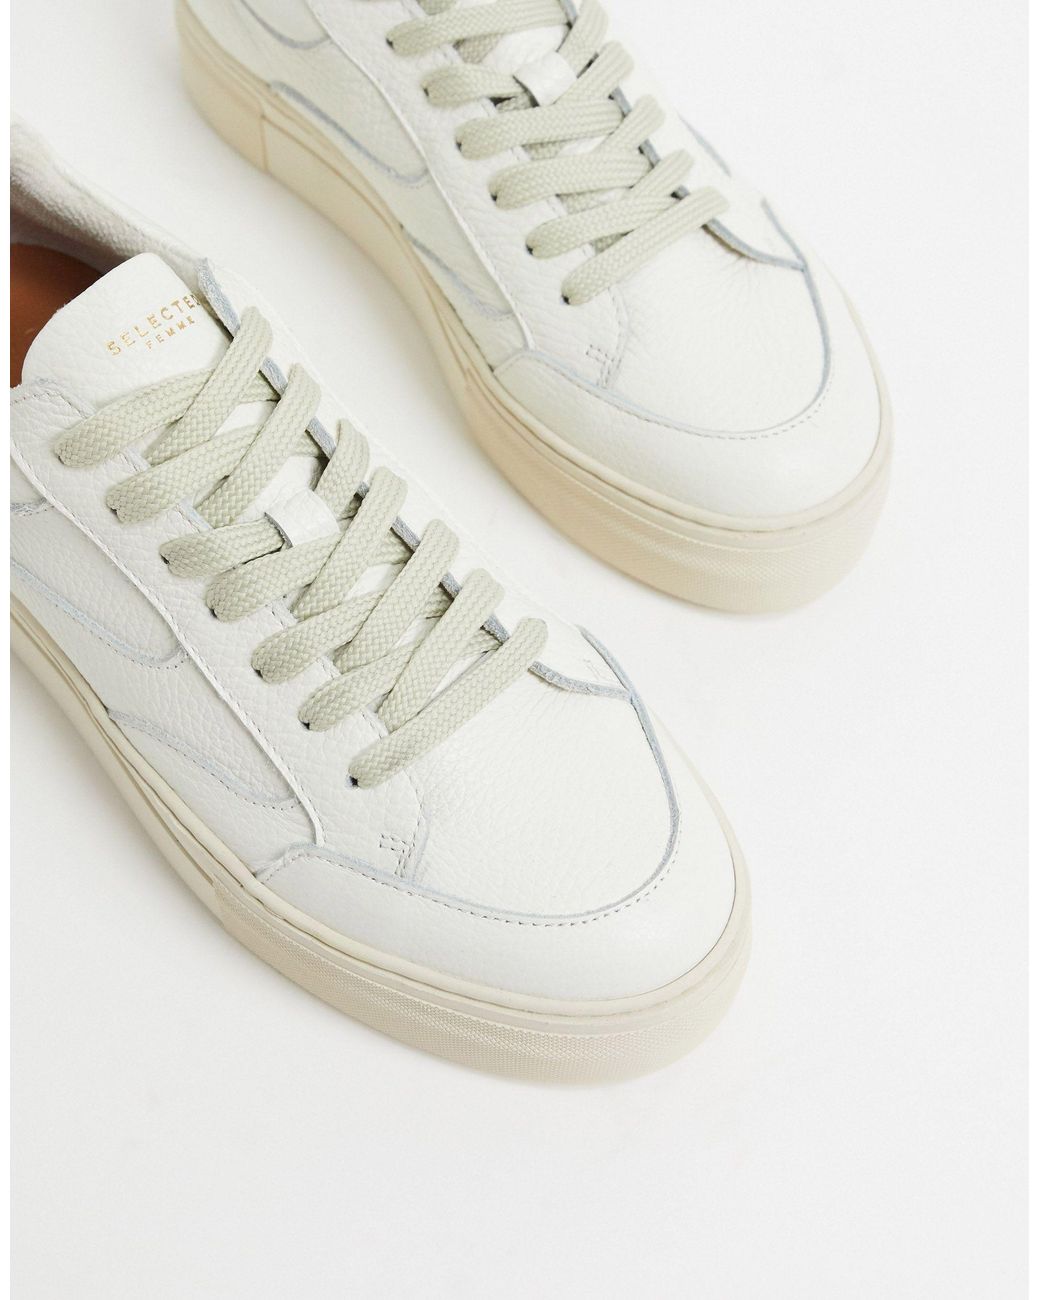 SELECTED Femme Platform Leather Sneaker in White | Lyst Australia